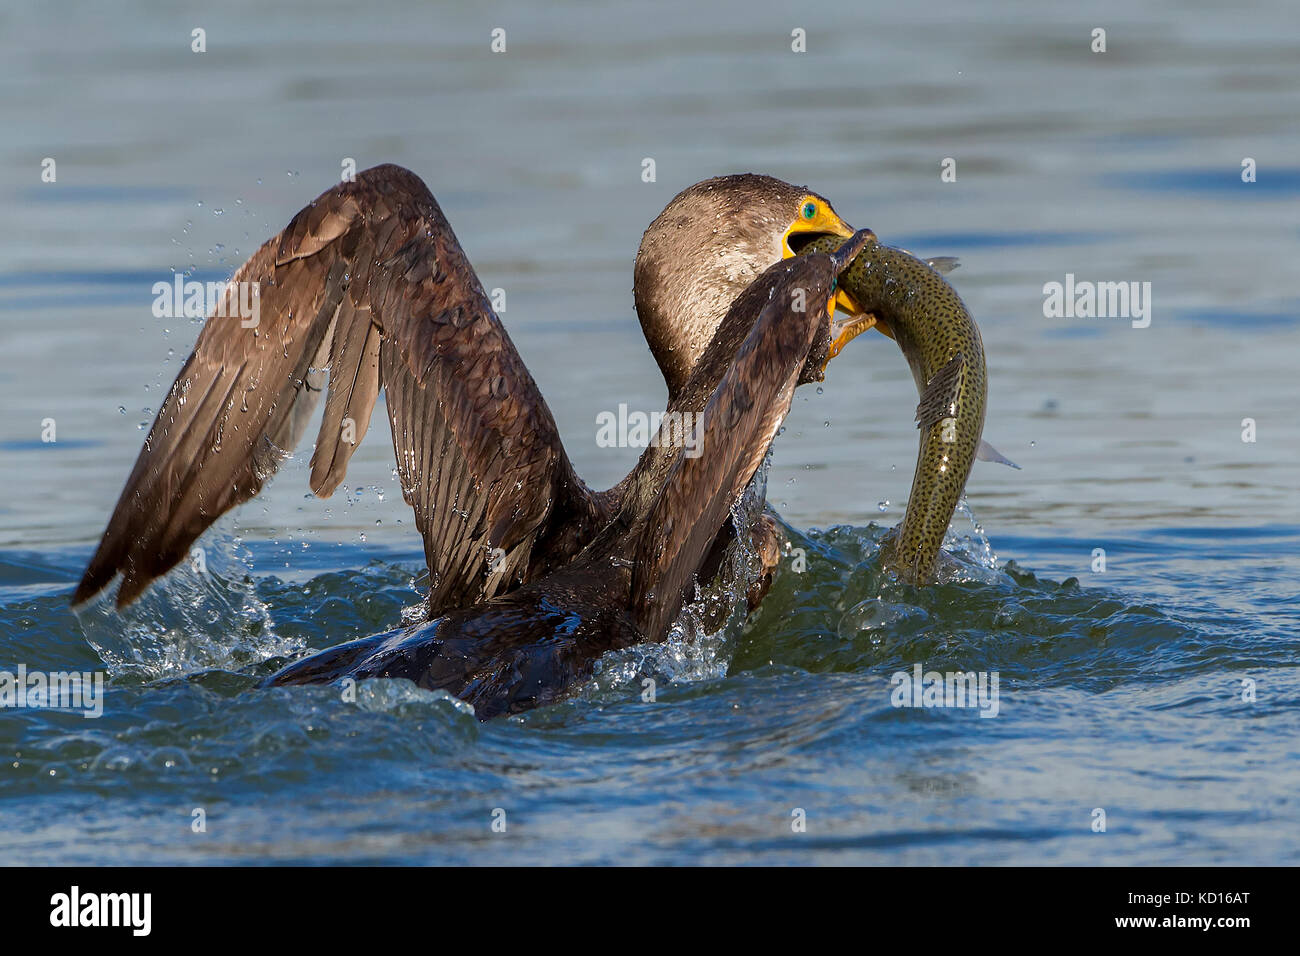 Cormorants fighting over fish in wild action Stock Photo